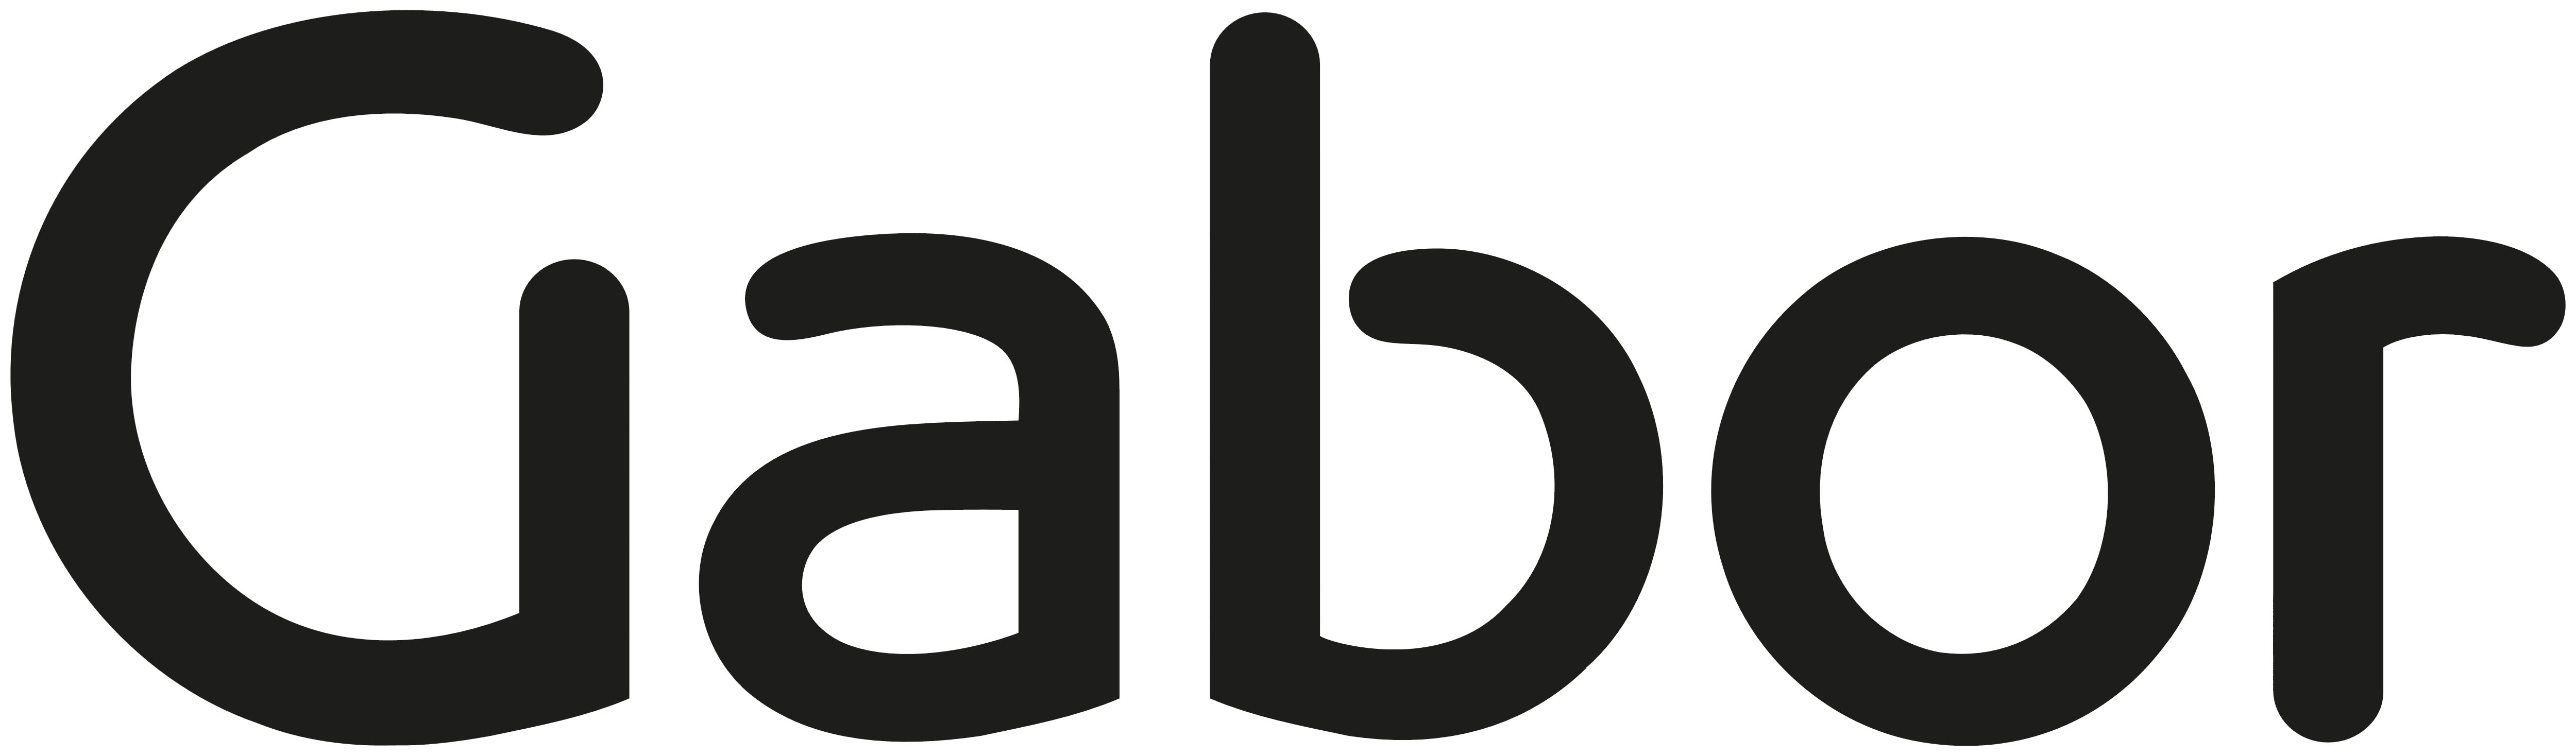 Gabor – Logos Download